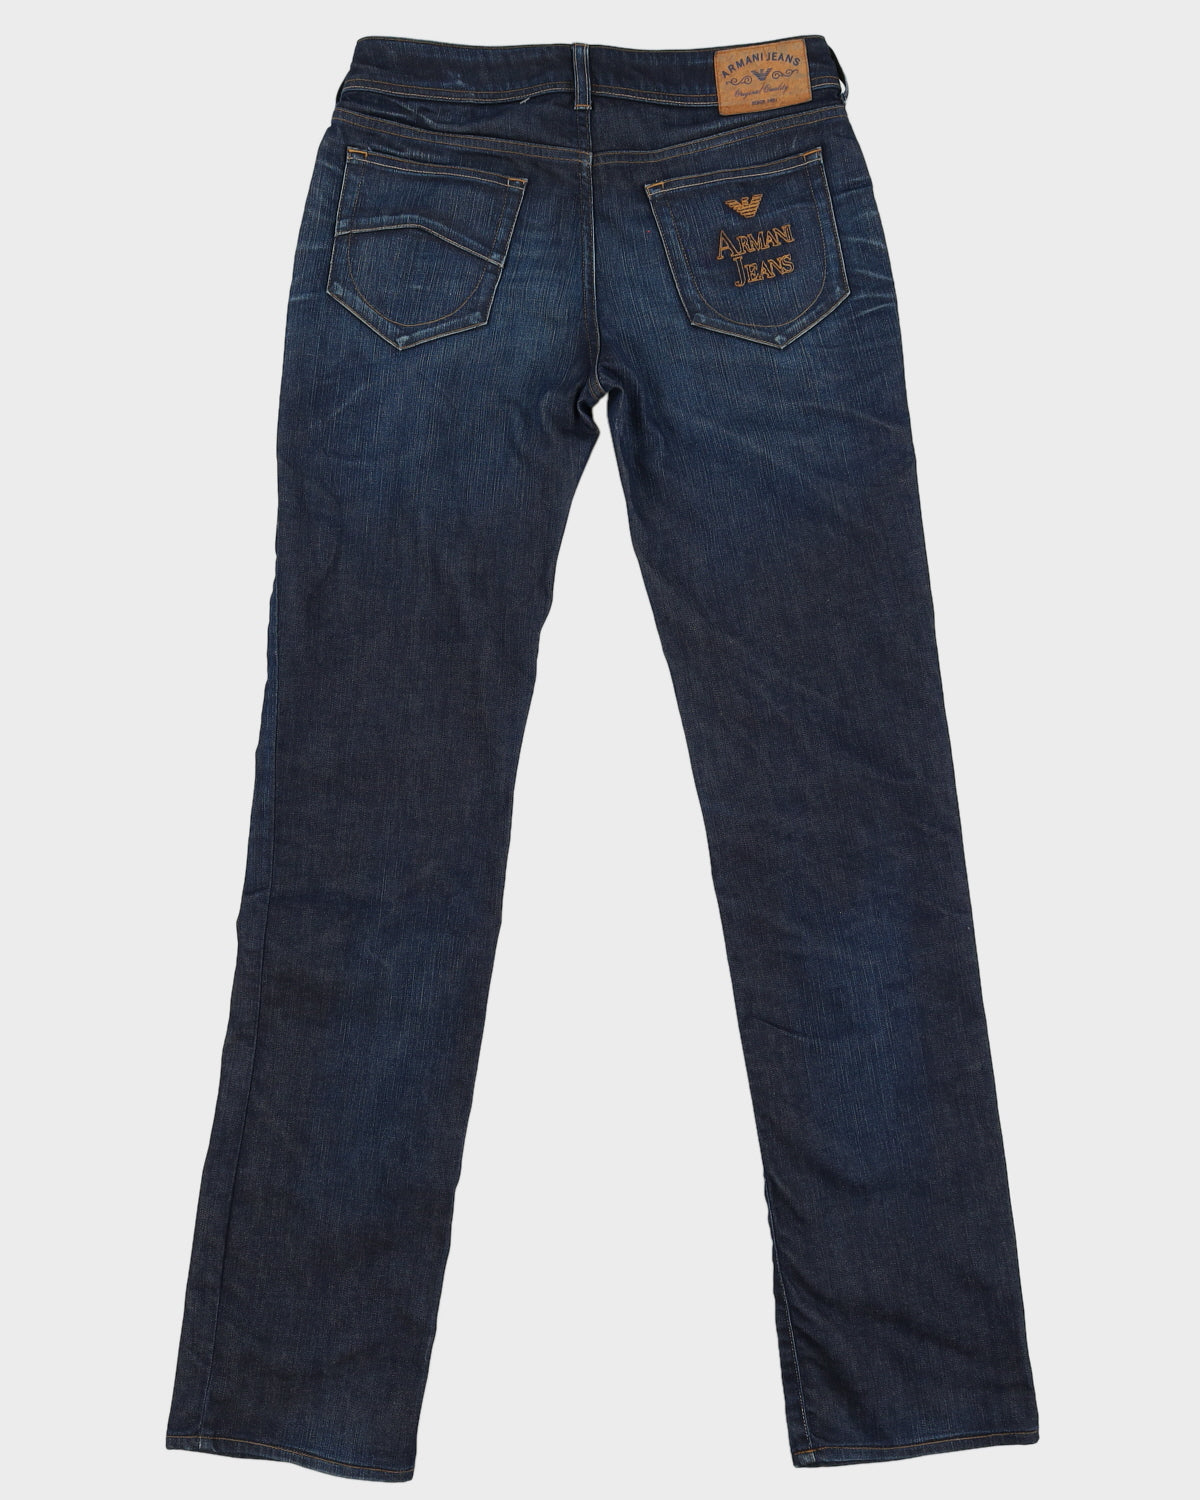 Armani Dark Wash Slim Leg Denim Jeans - W29